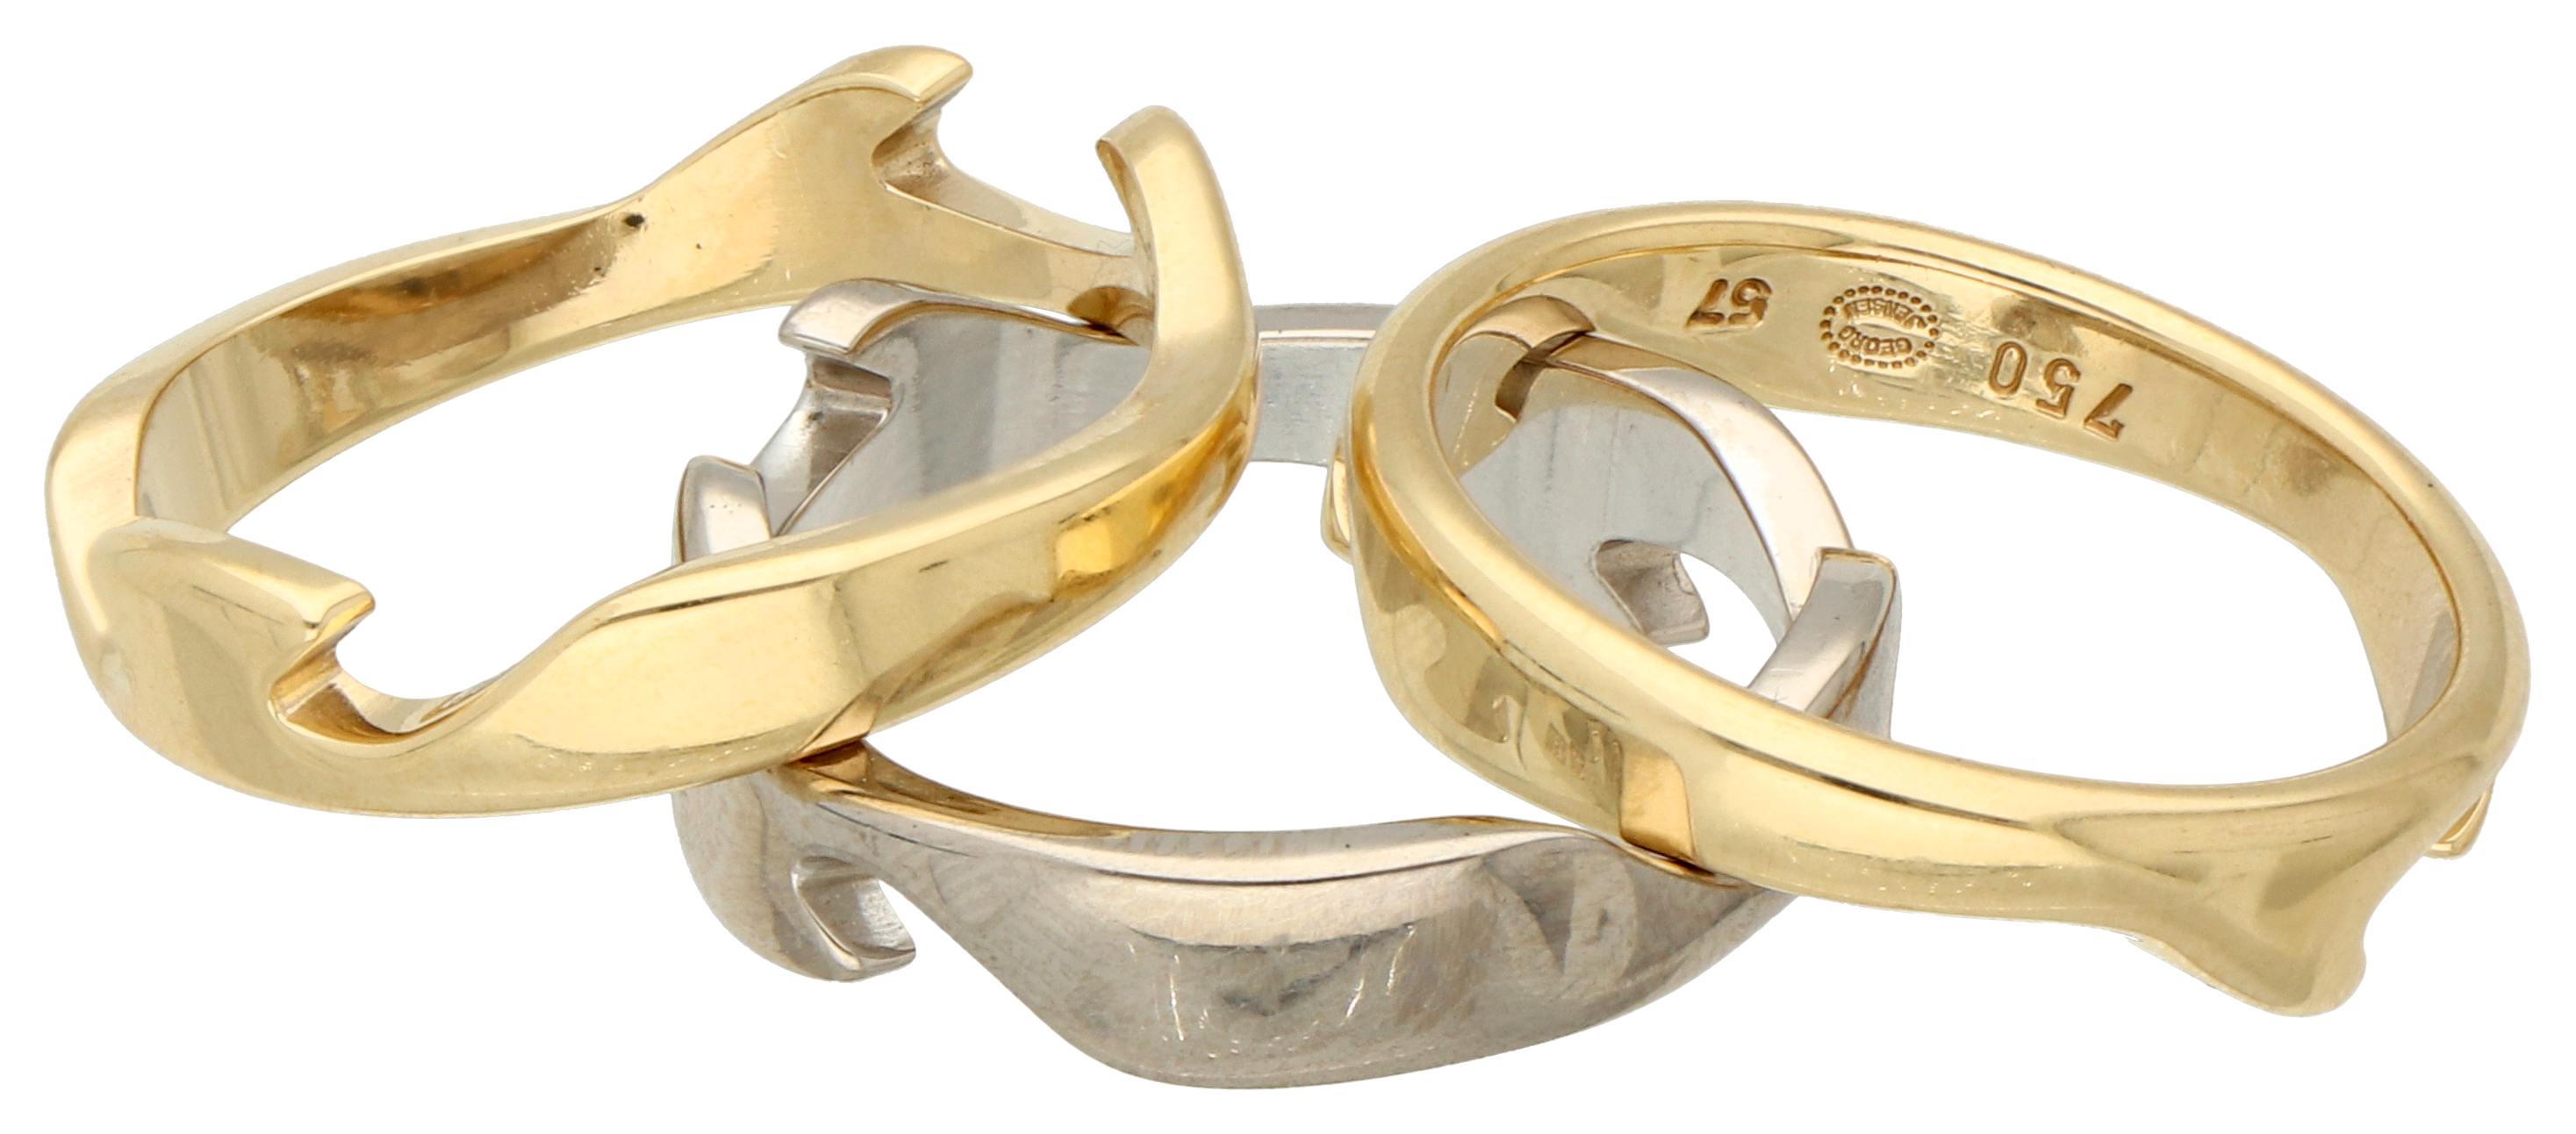 No Reserve - Georg Jensen 18K bicolor gold Fusion ring. - Image 3 of 4